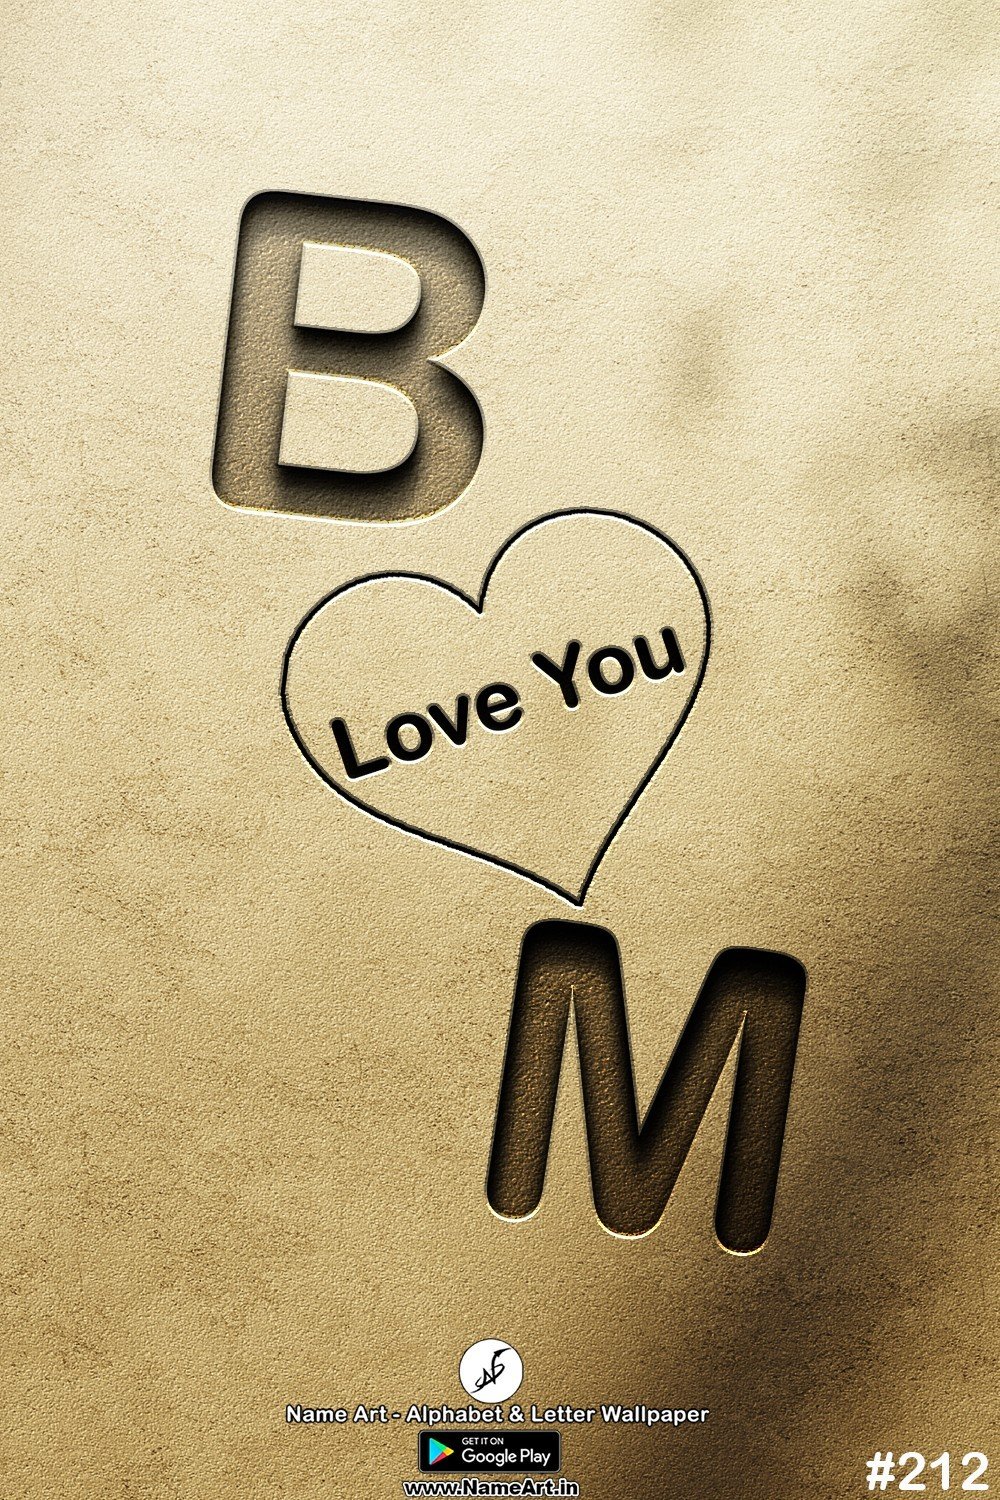 BM | Whatsapp Status DP BM | BM Love Status Cute Couples Whatsapp Status DP !! | New Whatsapp Status DP BM Images |